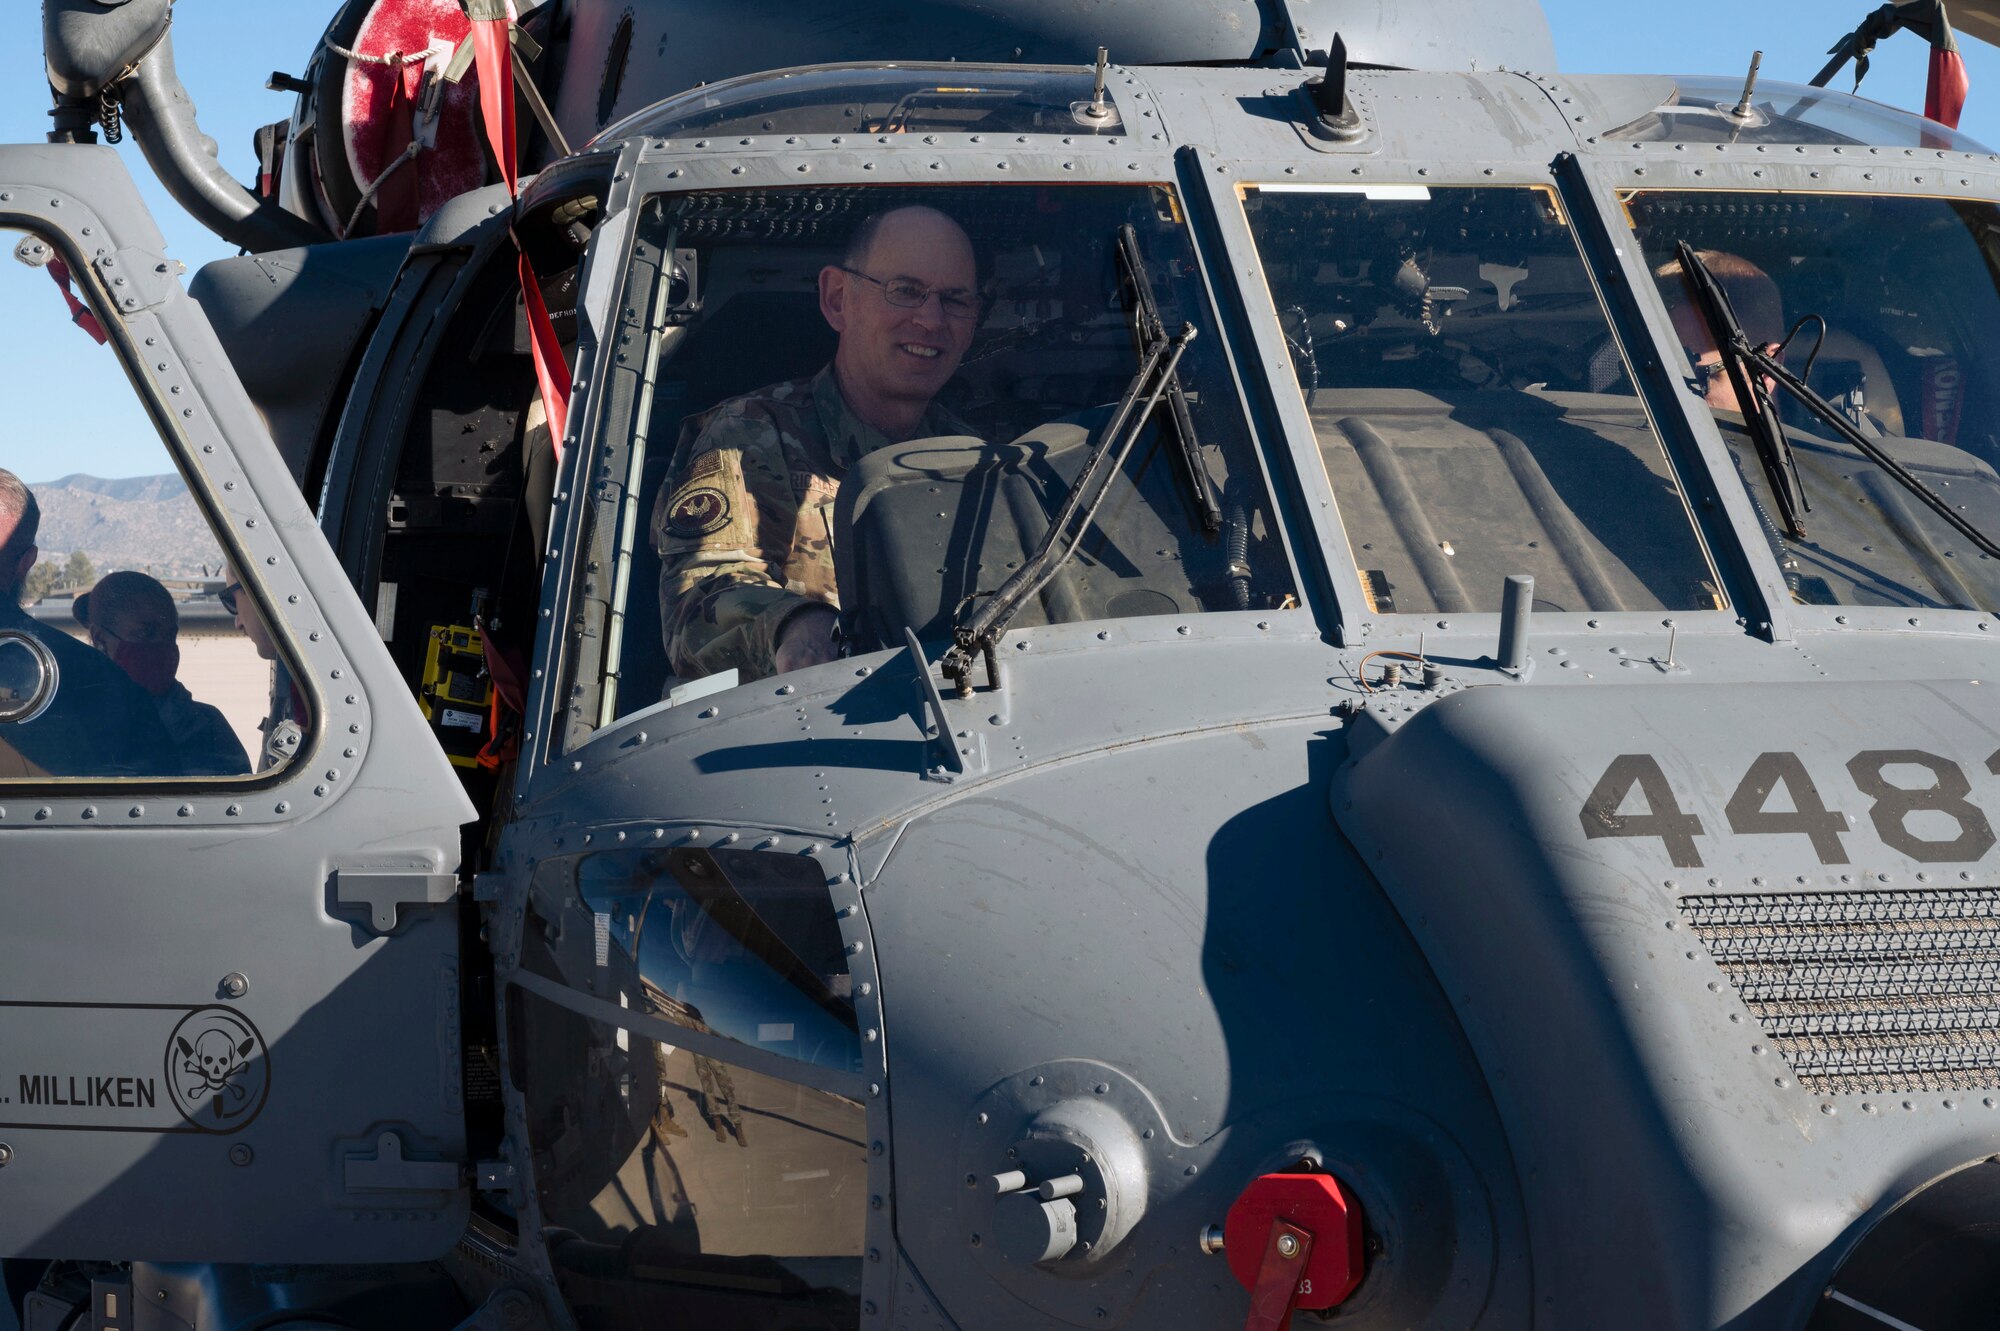 A man sits in an aircraft.